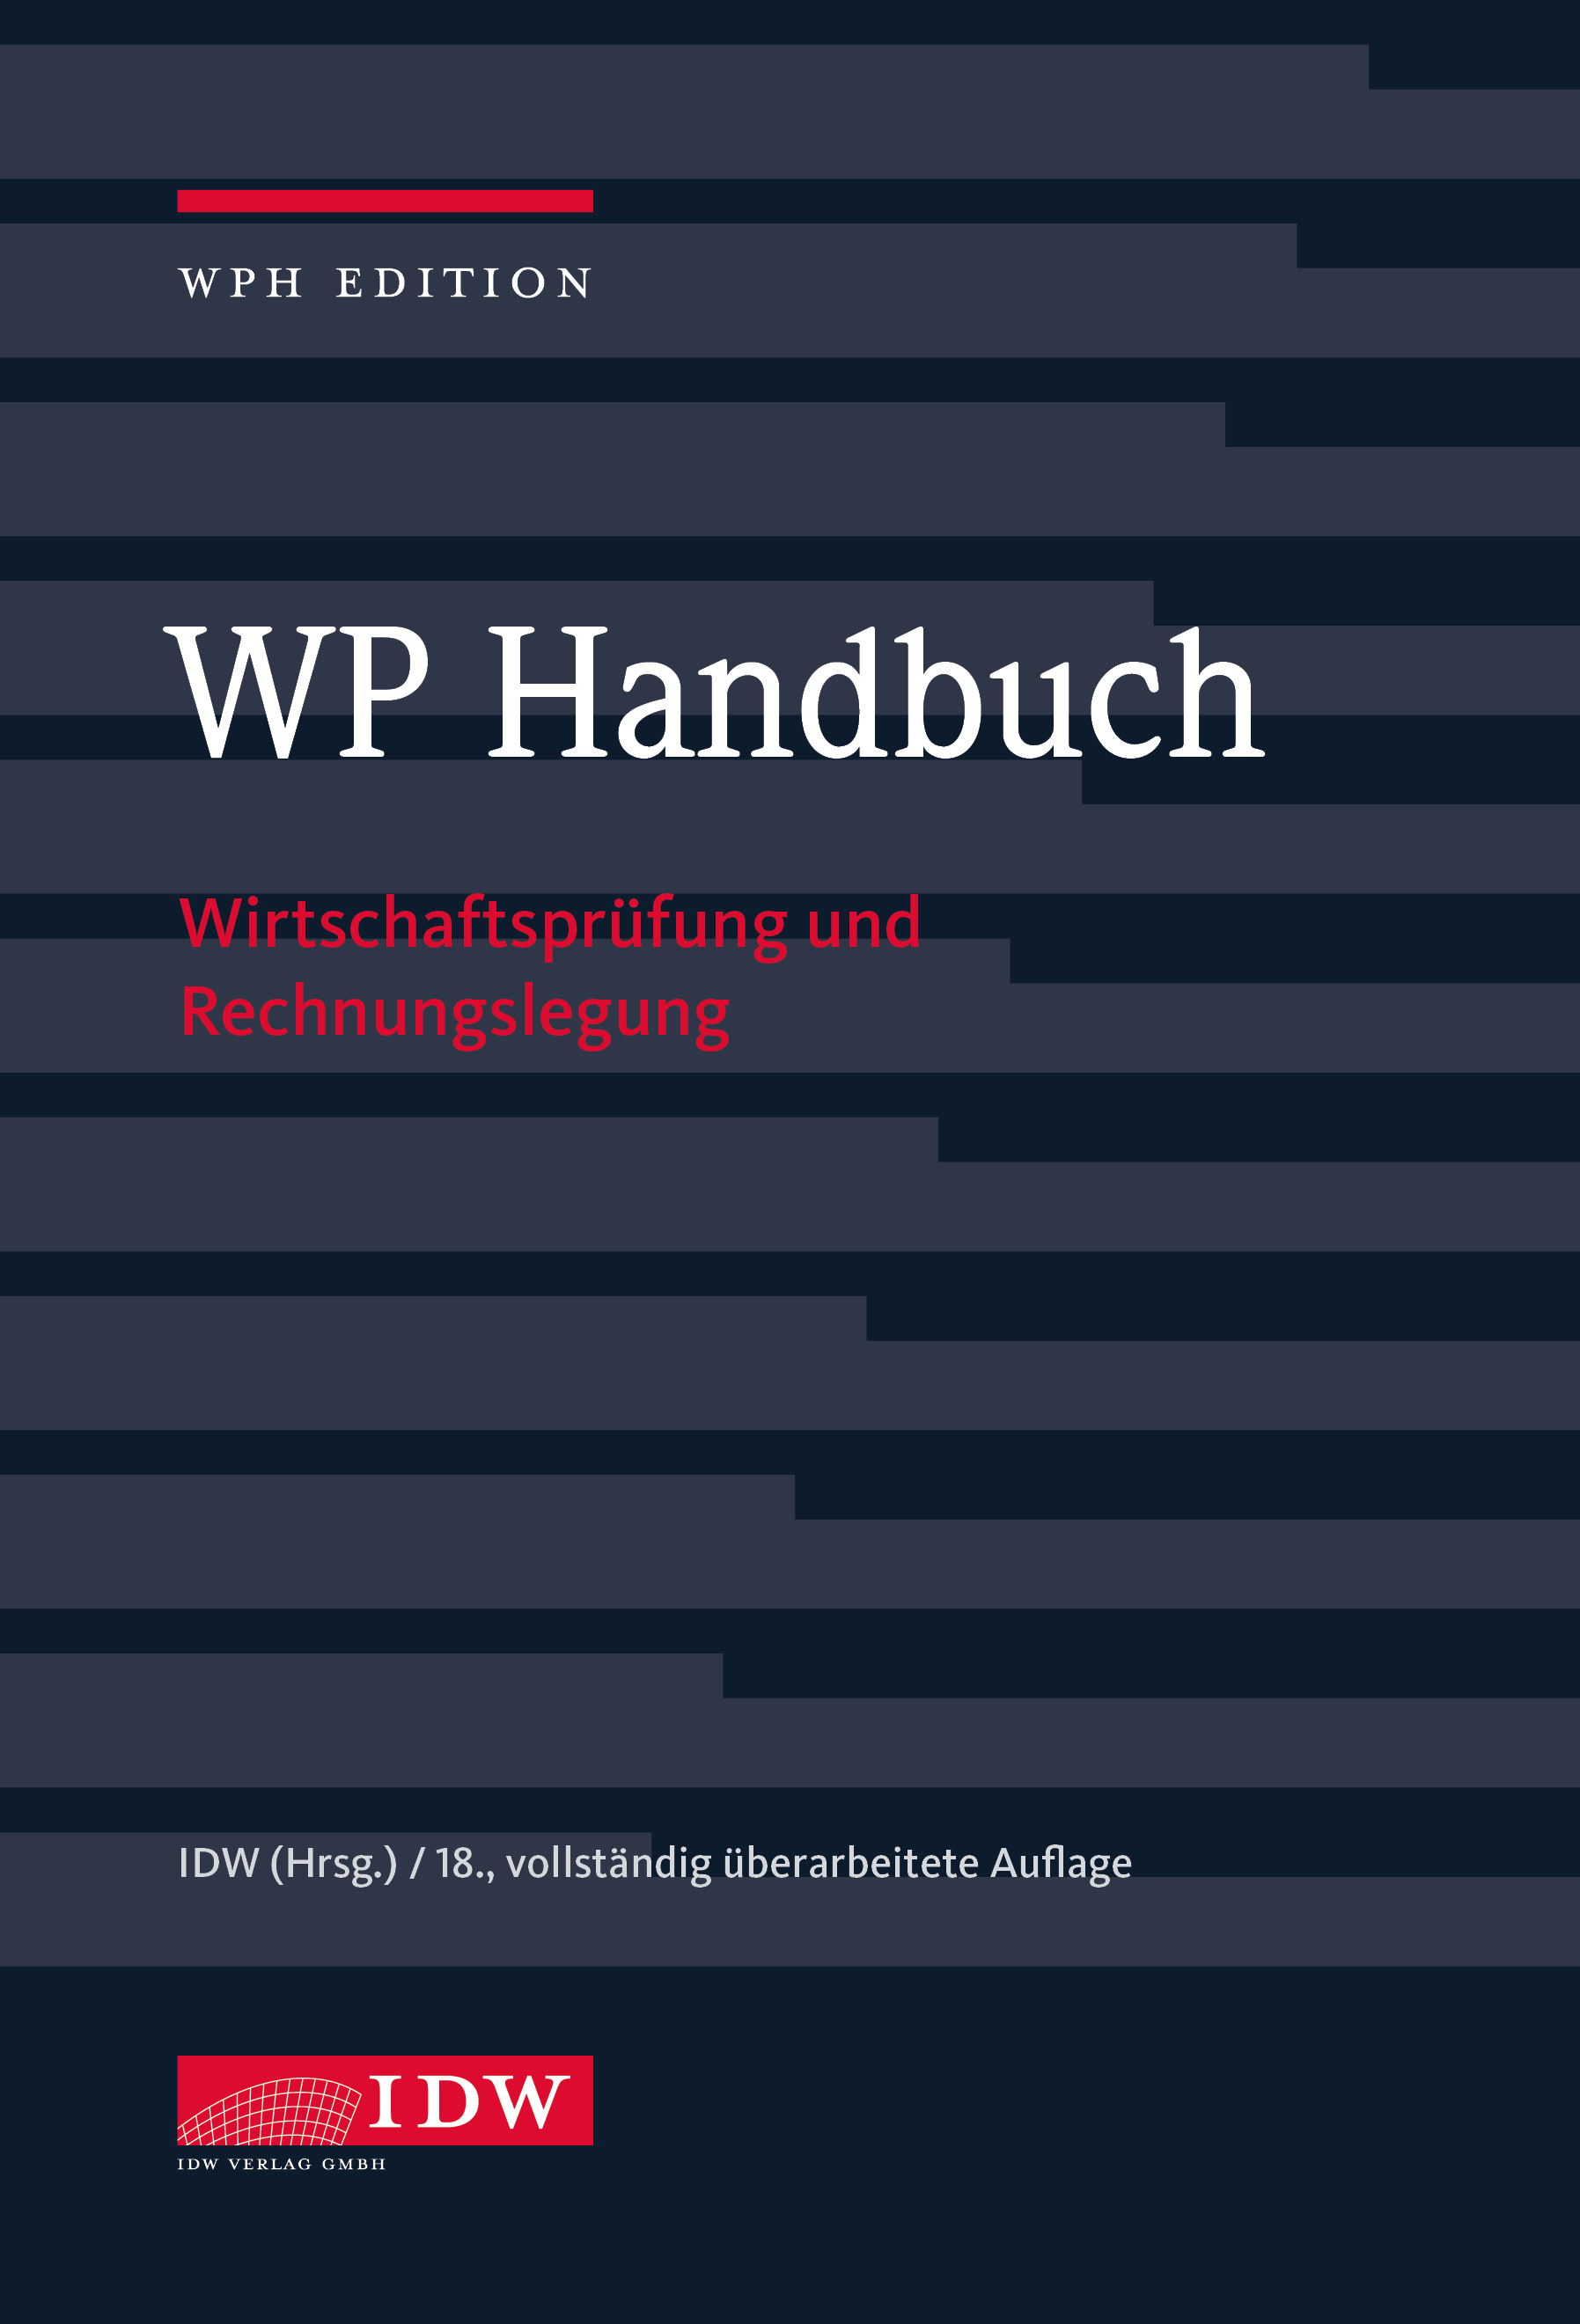 WP Handbuch 